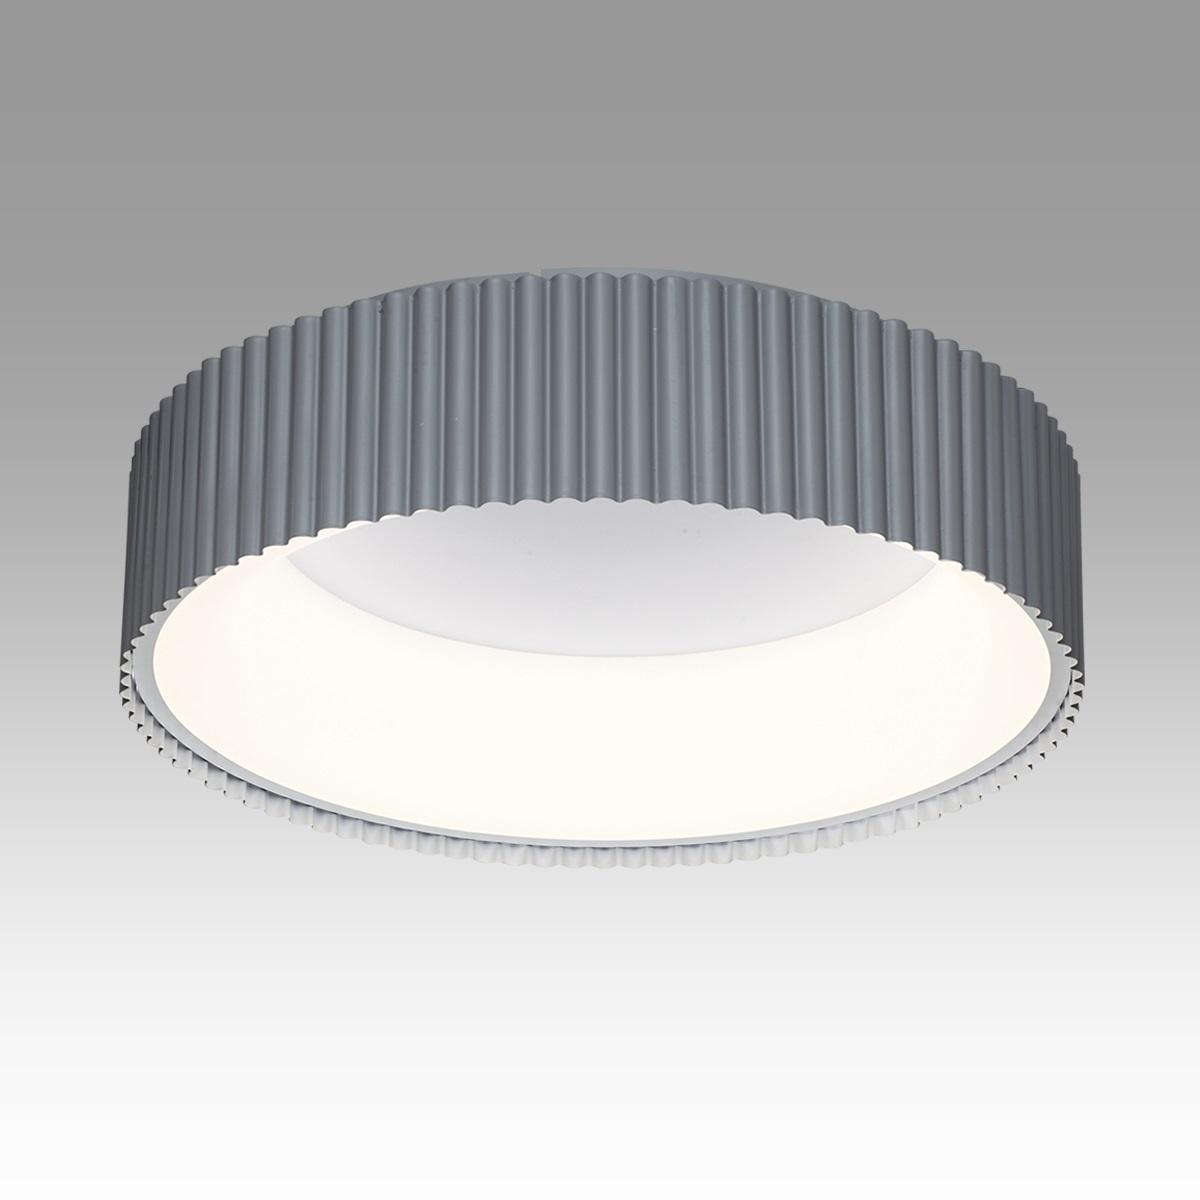 потолочный светодиодный светильник sonex avra sharmel 7713/56l